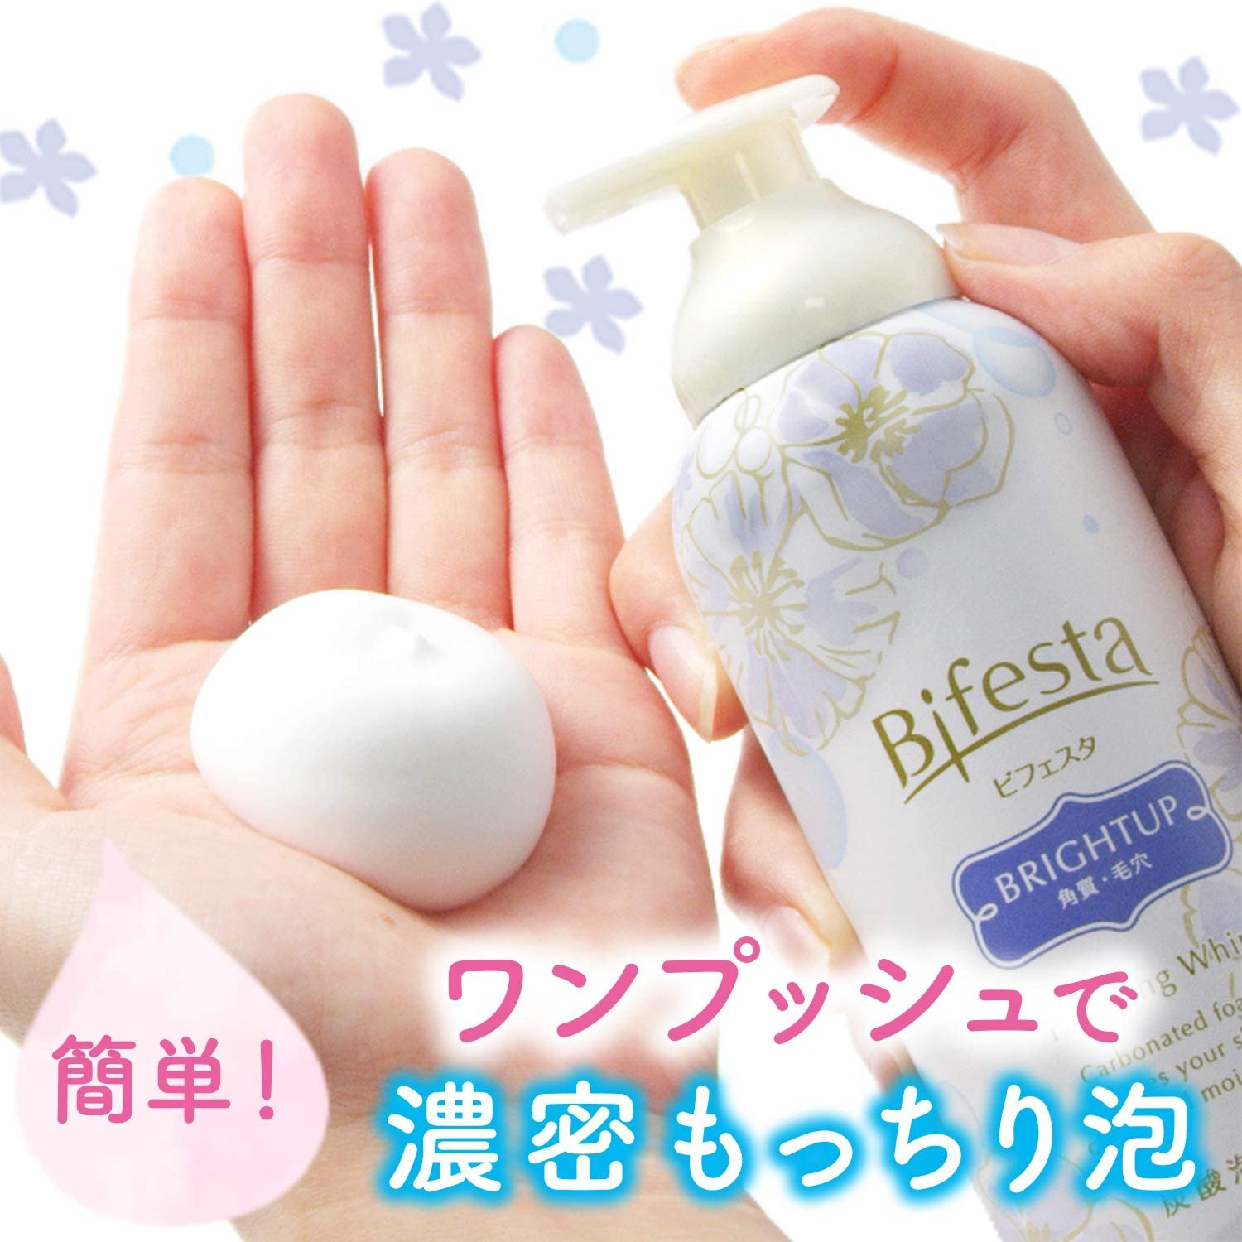 Bifesta(ビフェスタ) 泡洗顔 ブライトアップの商品画像8 